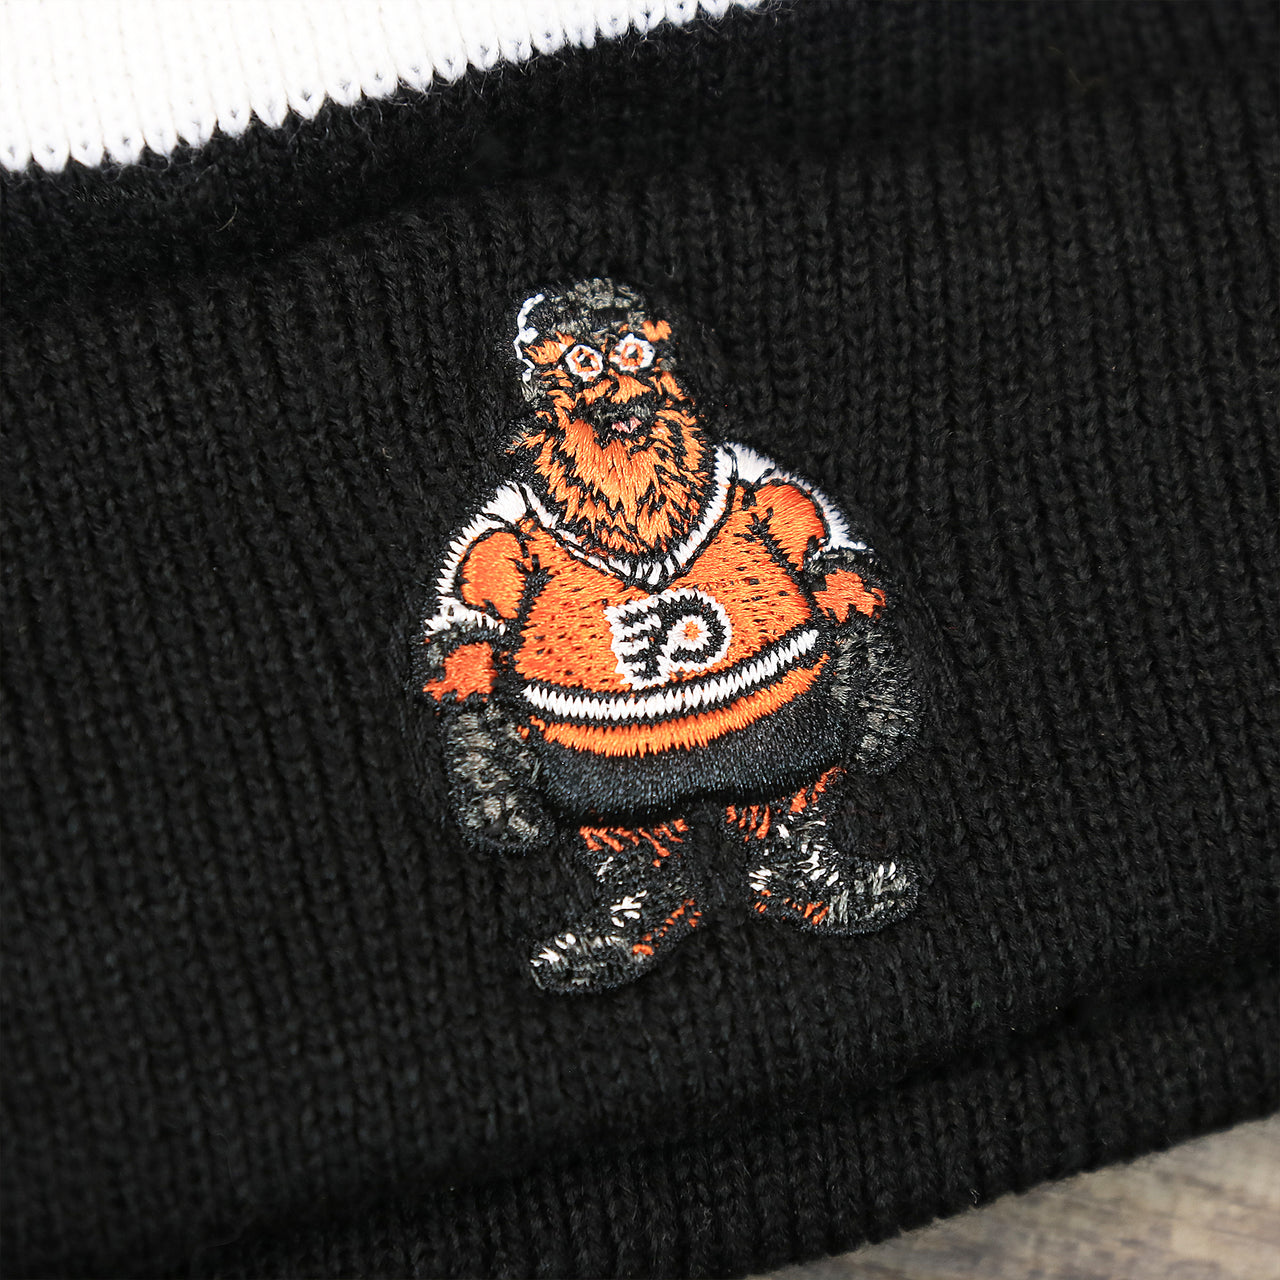 The Gritty Logo on the Philadelphia Flyers Mascot Gritty Black And White Striped Cuffed Pom Pom Winter Beanie | Black Winter Beanie